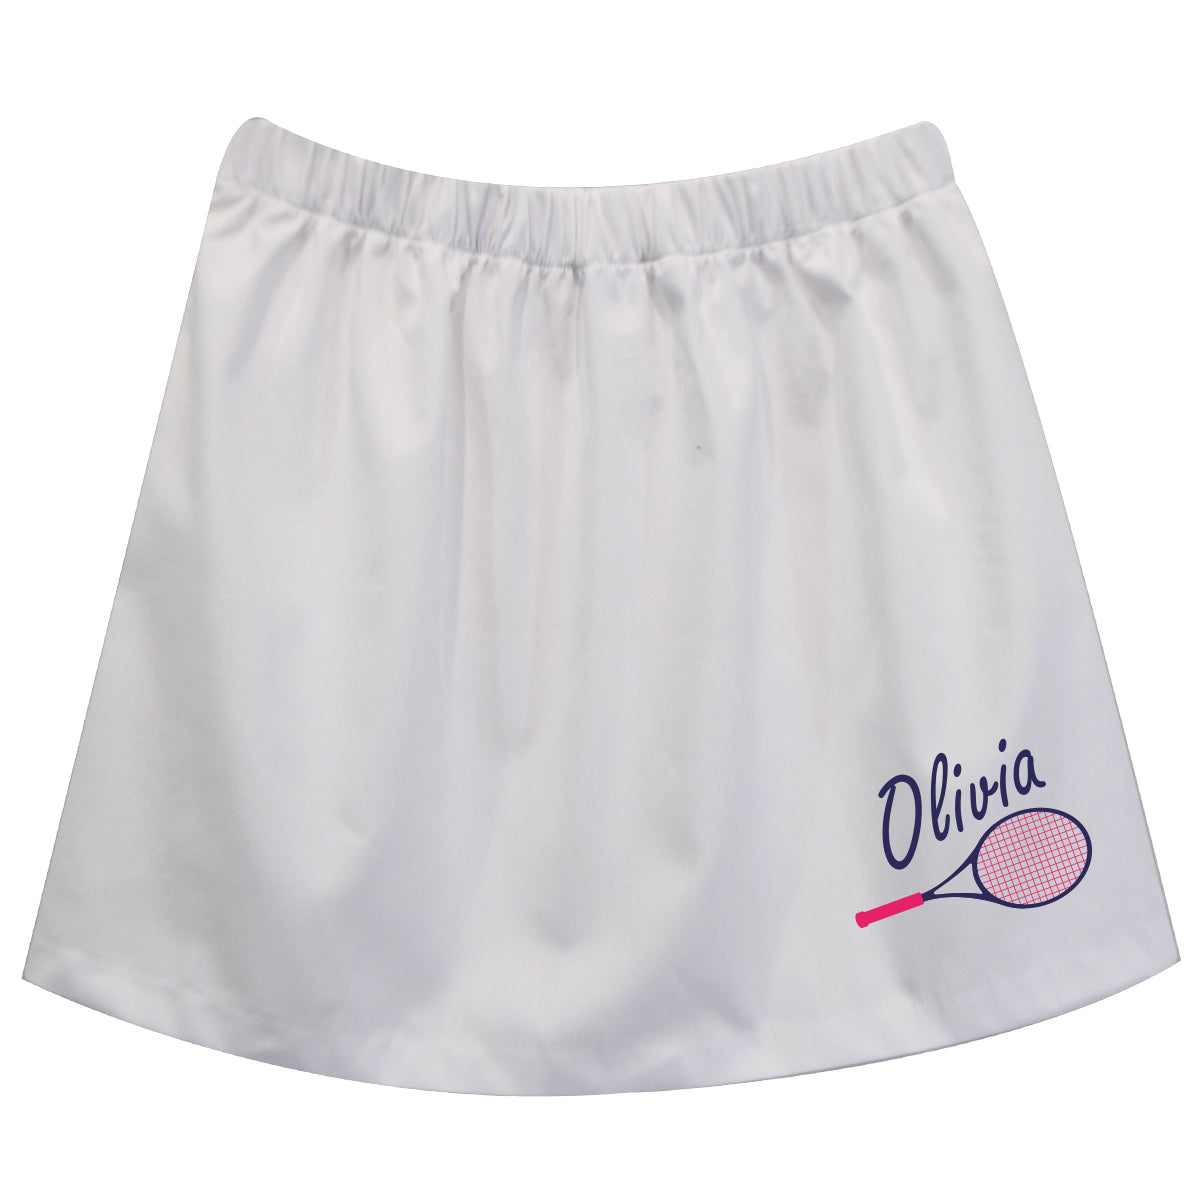 Tennis Name White Skirt